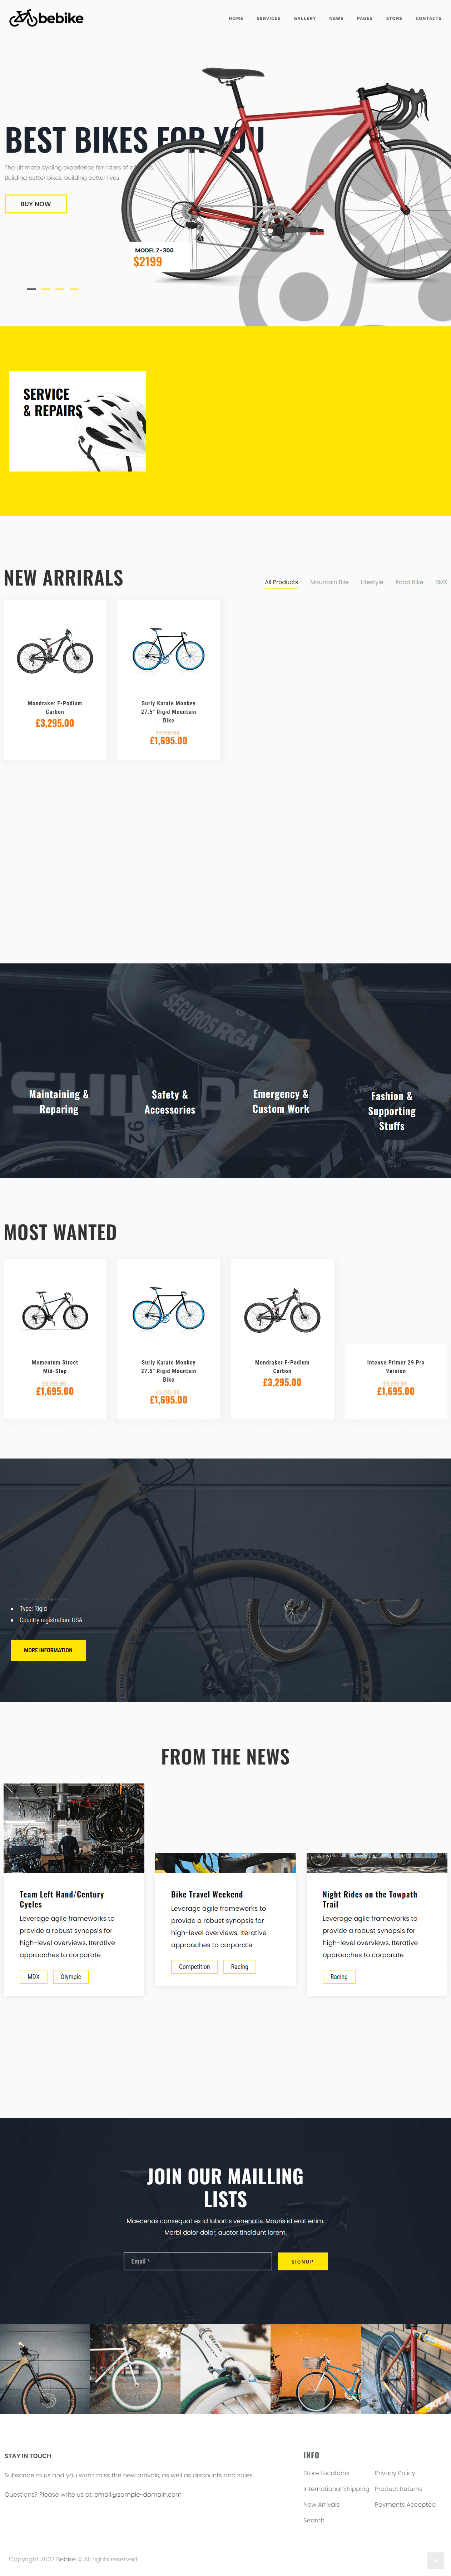 Sport Equipment Store-website-template-2